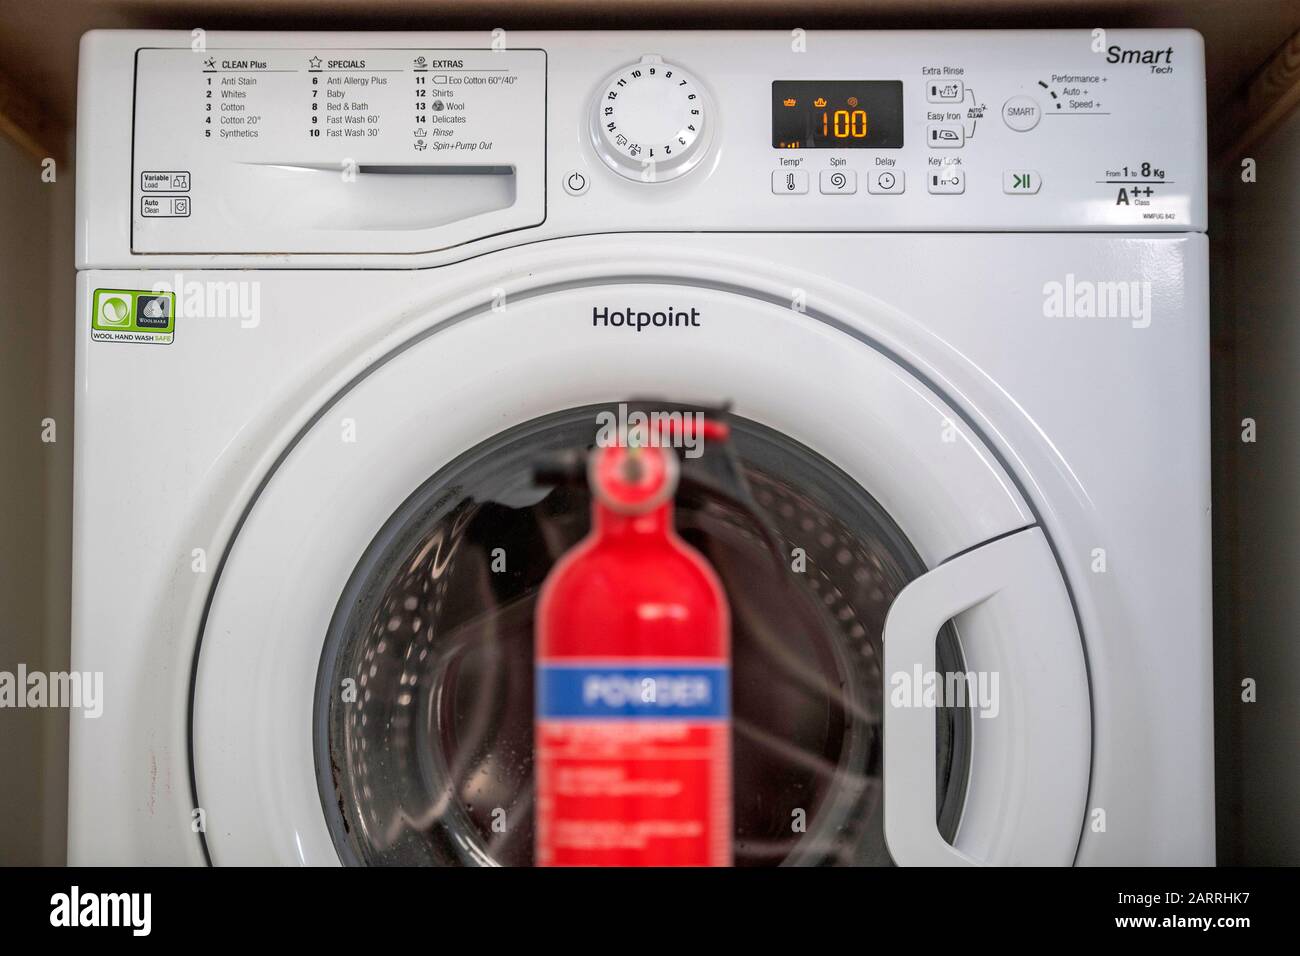 Indesit washing machine hi-res stock photography and images - Alamy